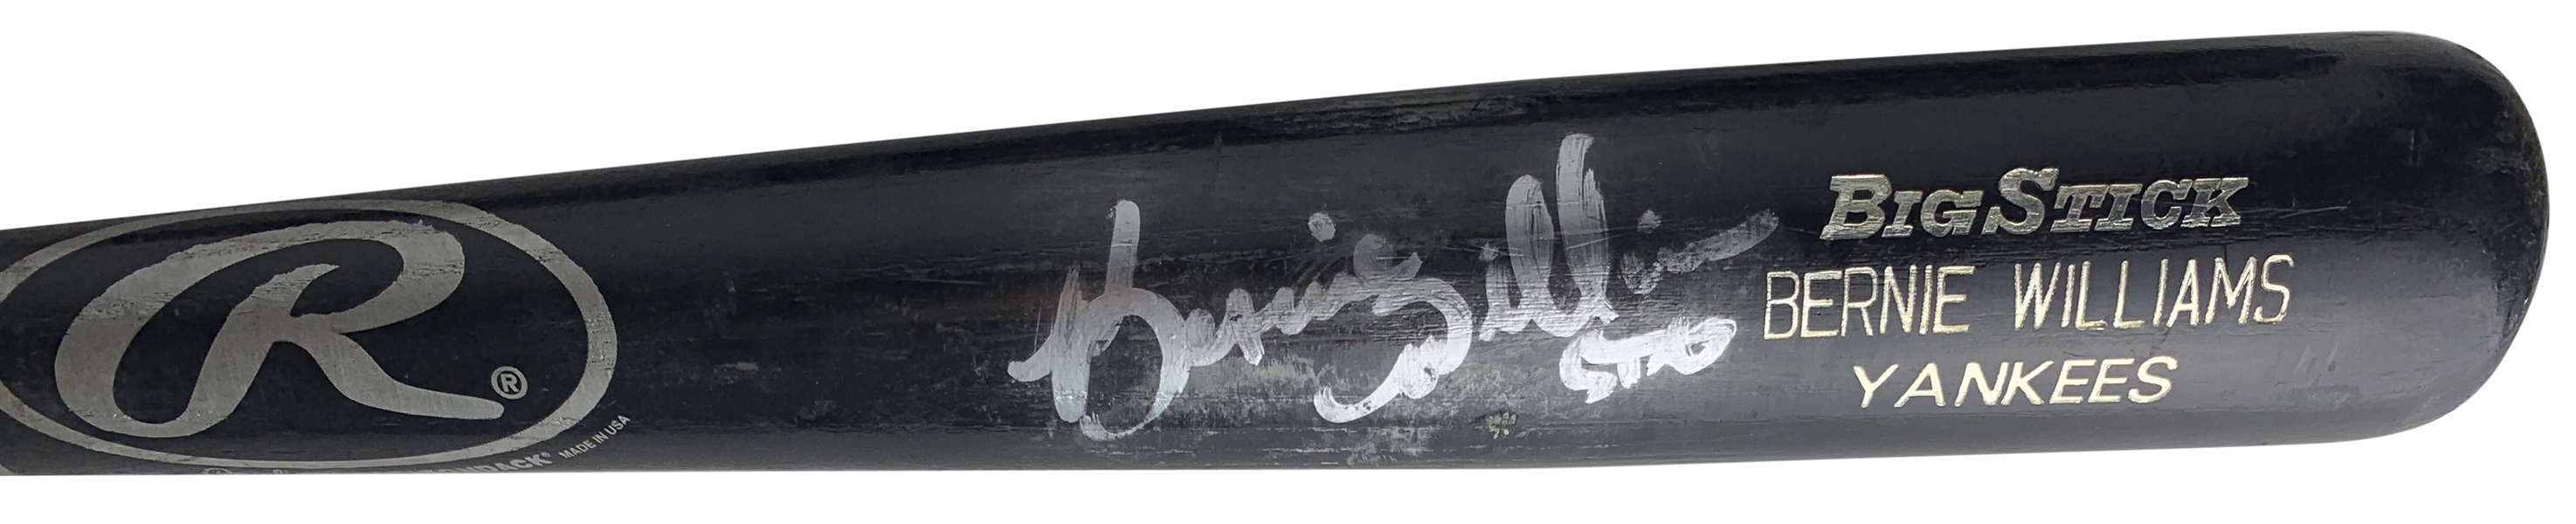 Bernie Williams Signed Game Used 2000 ALCS Big Stick Baseball Bat (PSA/DNA GU10)